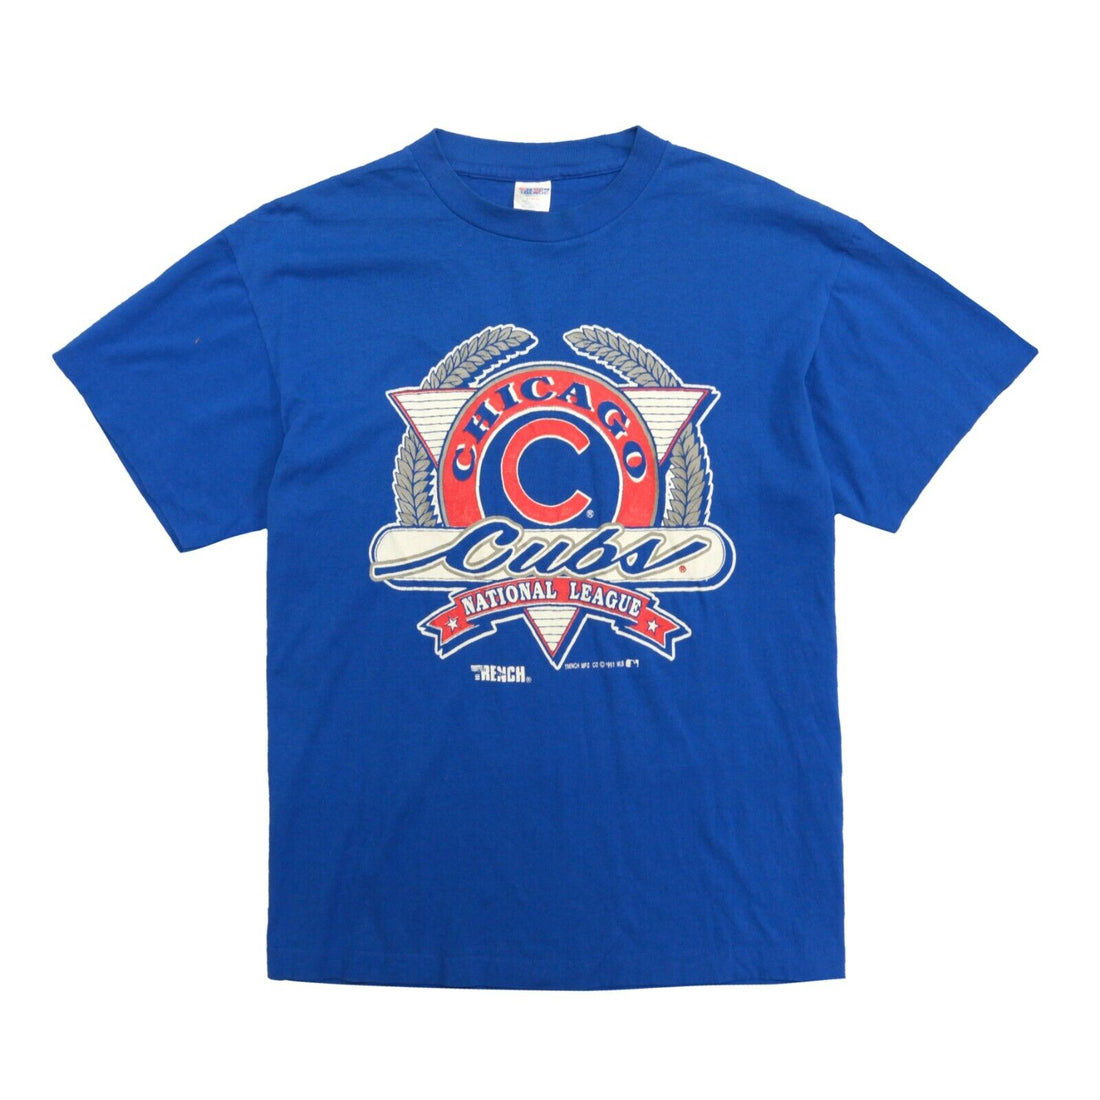 Vintage Chicago Cubs T-Shirt